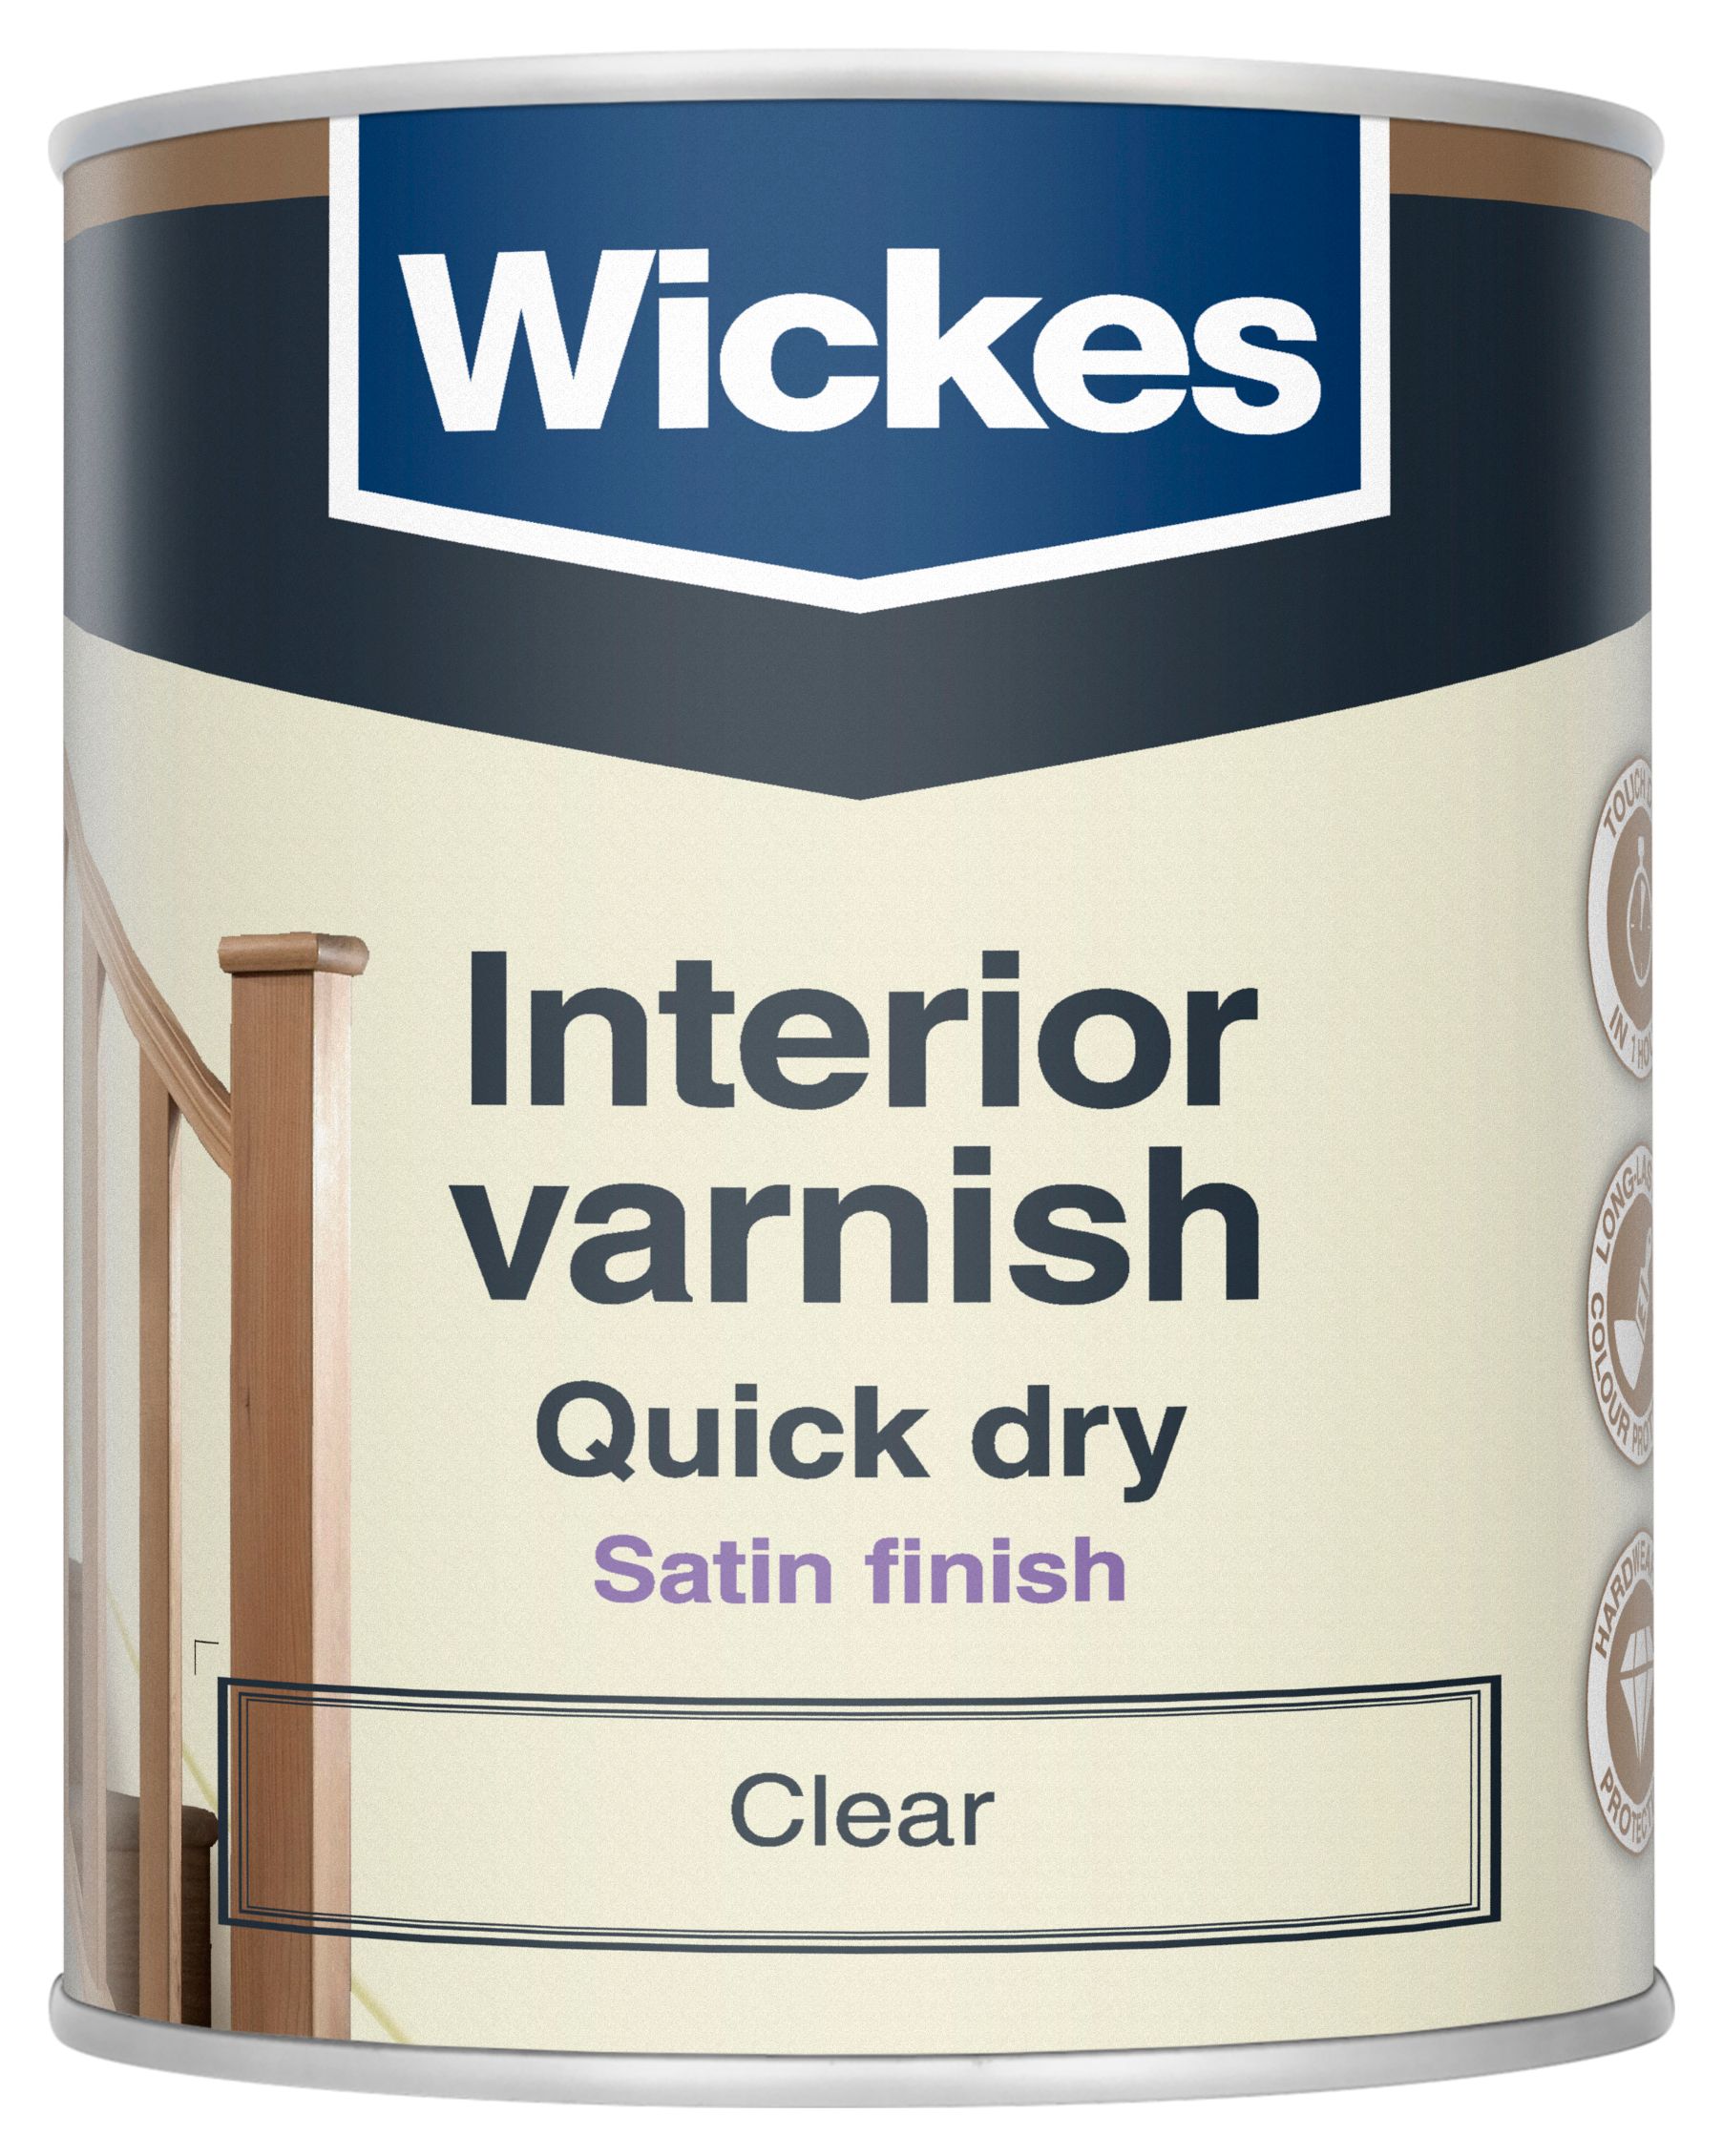 Wickes Quick Dry Interior Varnish - Clear Satin - 750ml